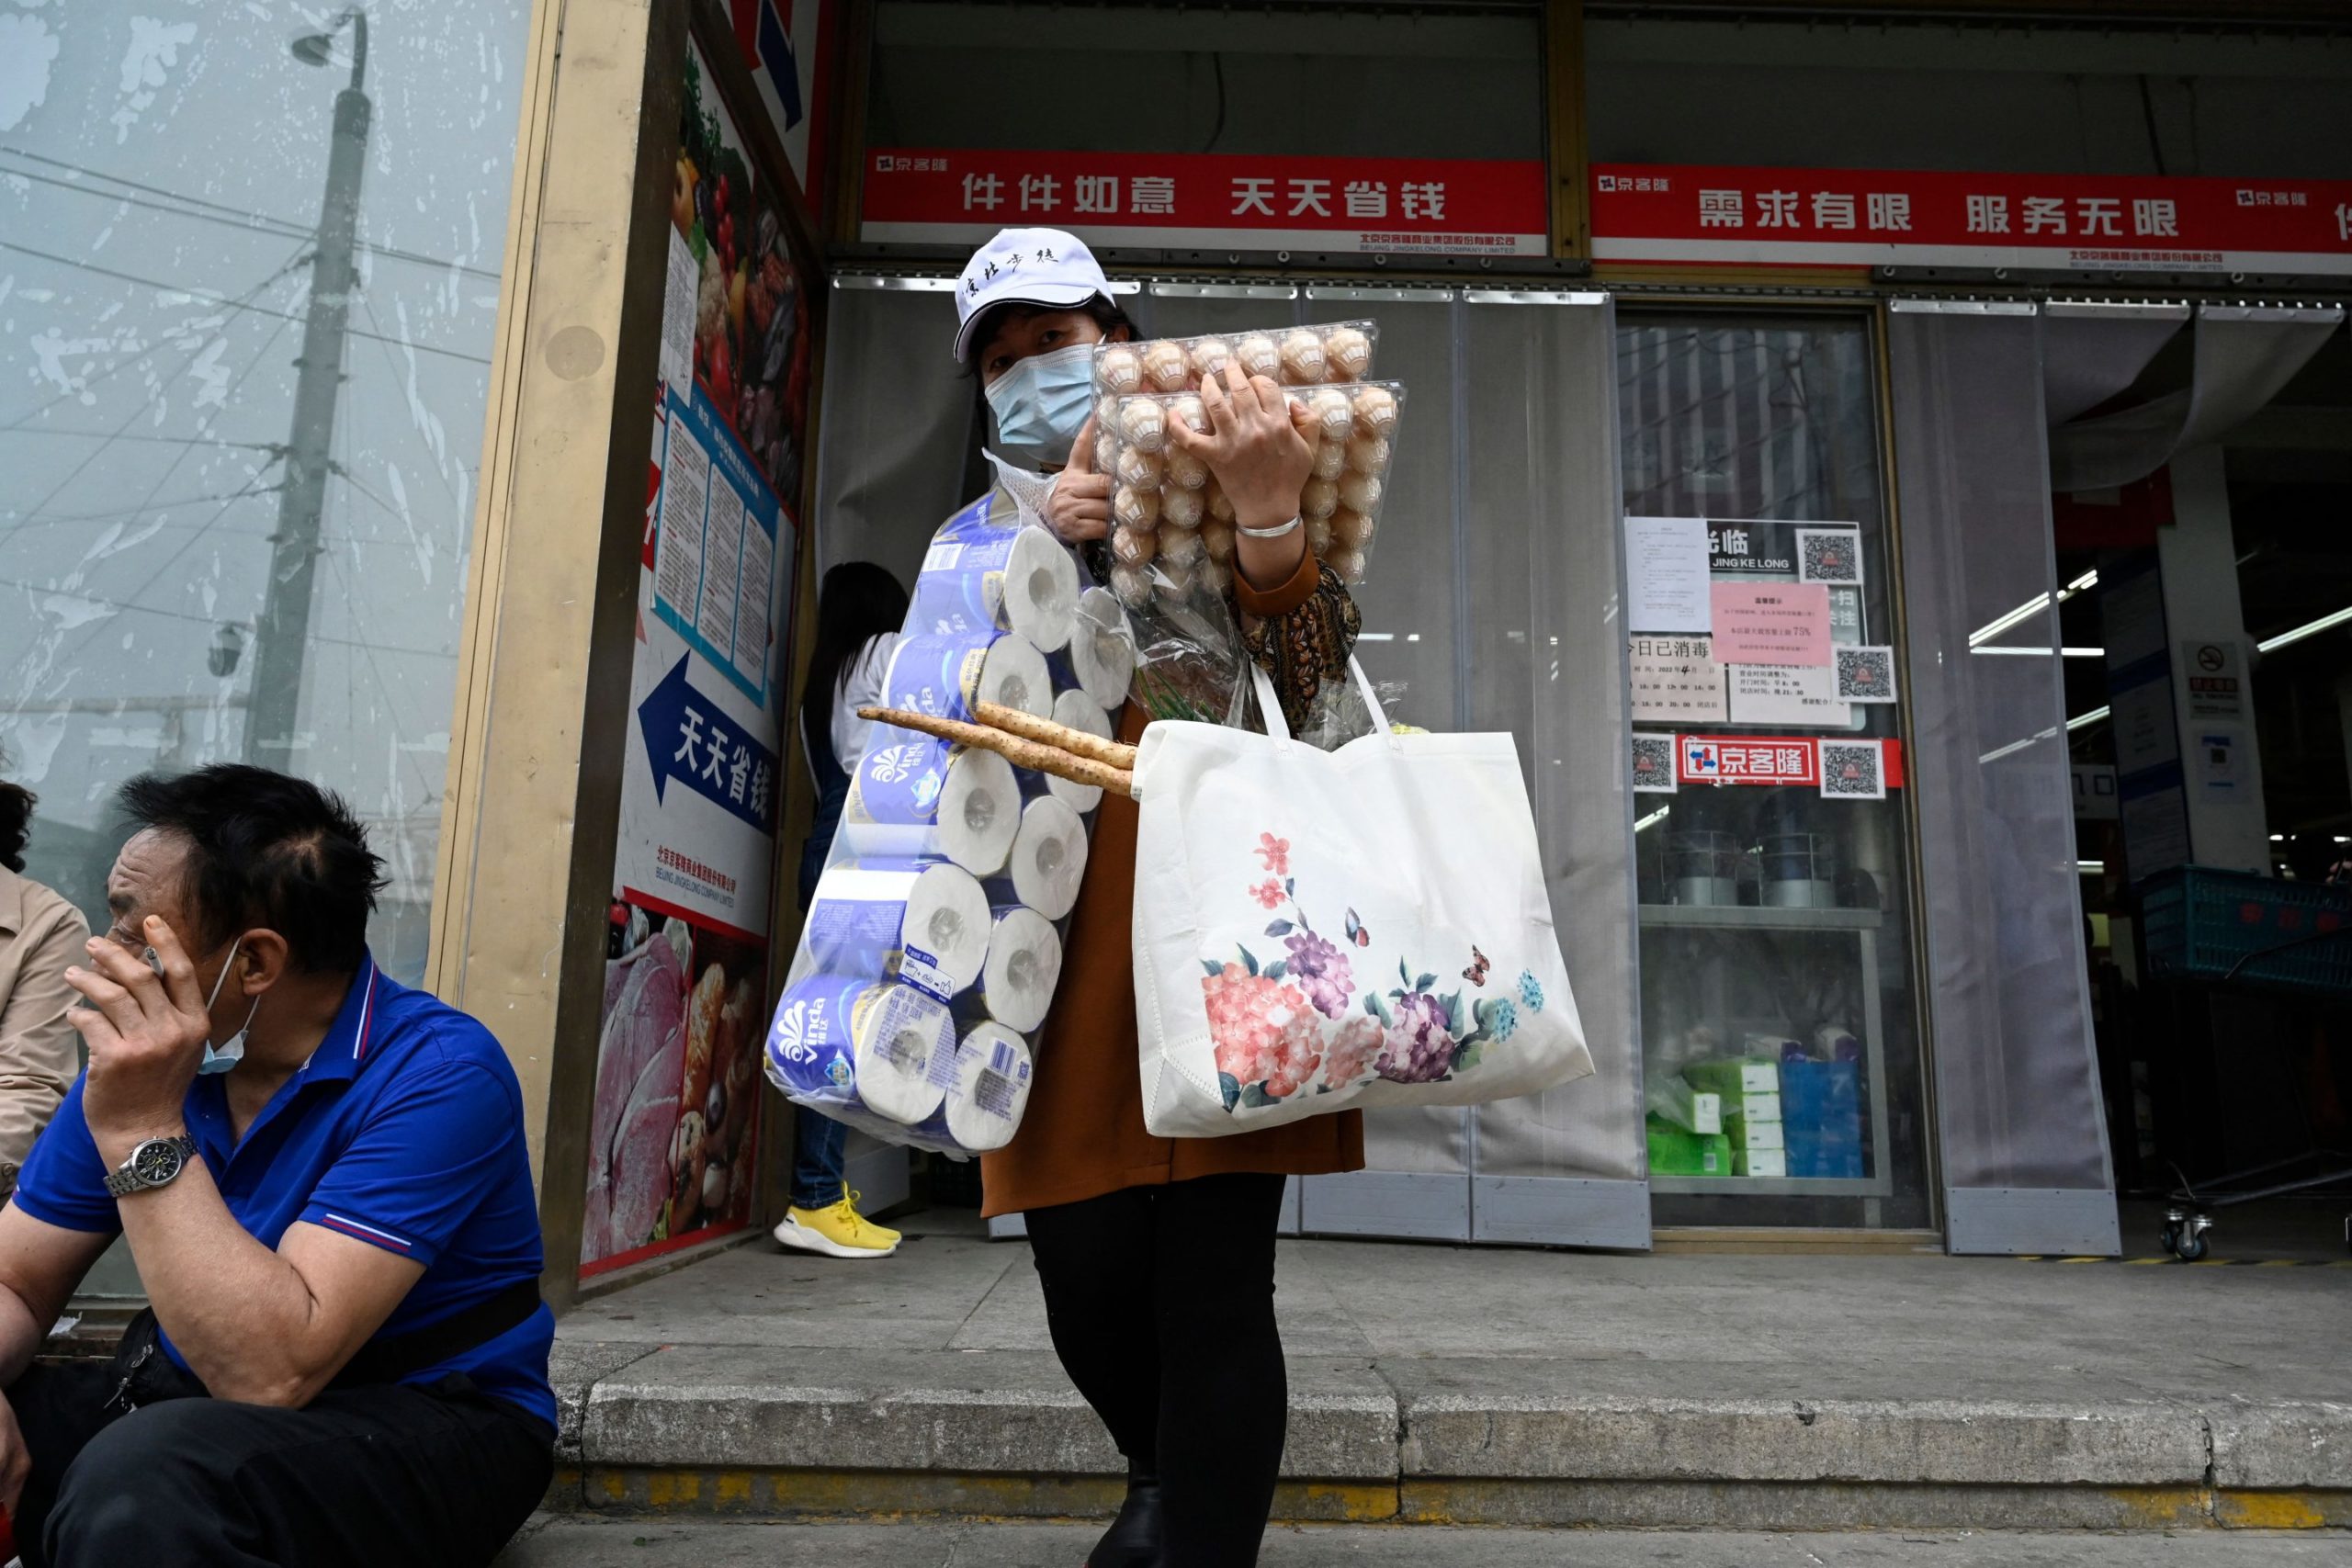 An uptick in COVID cases left Beijing scrambling to avoid a Shanghai-style lockdown